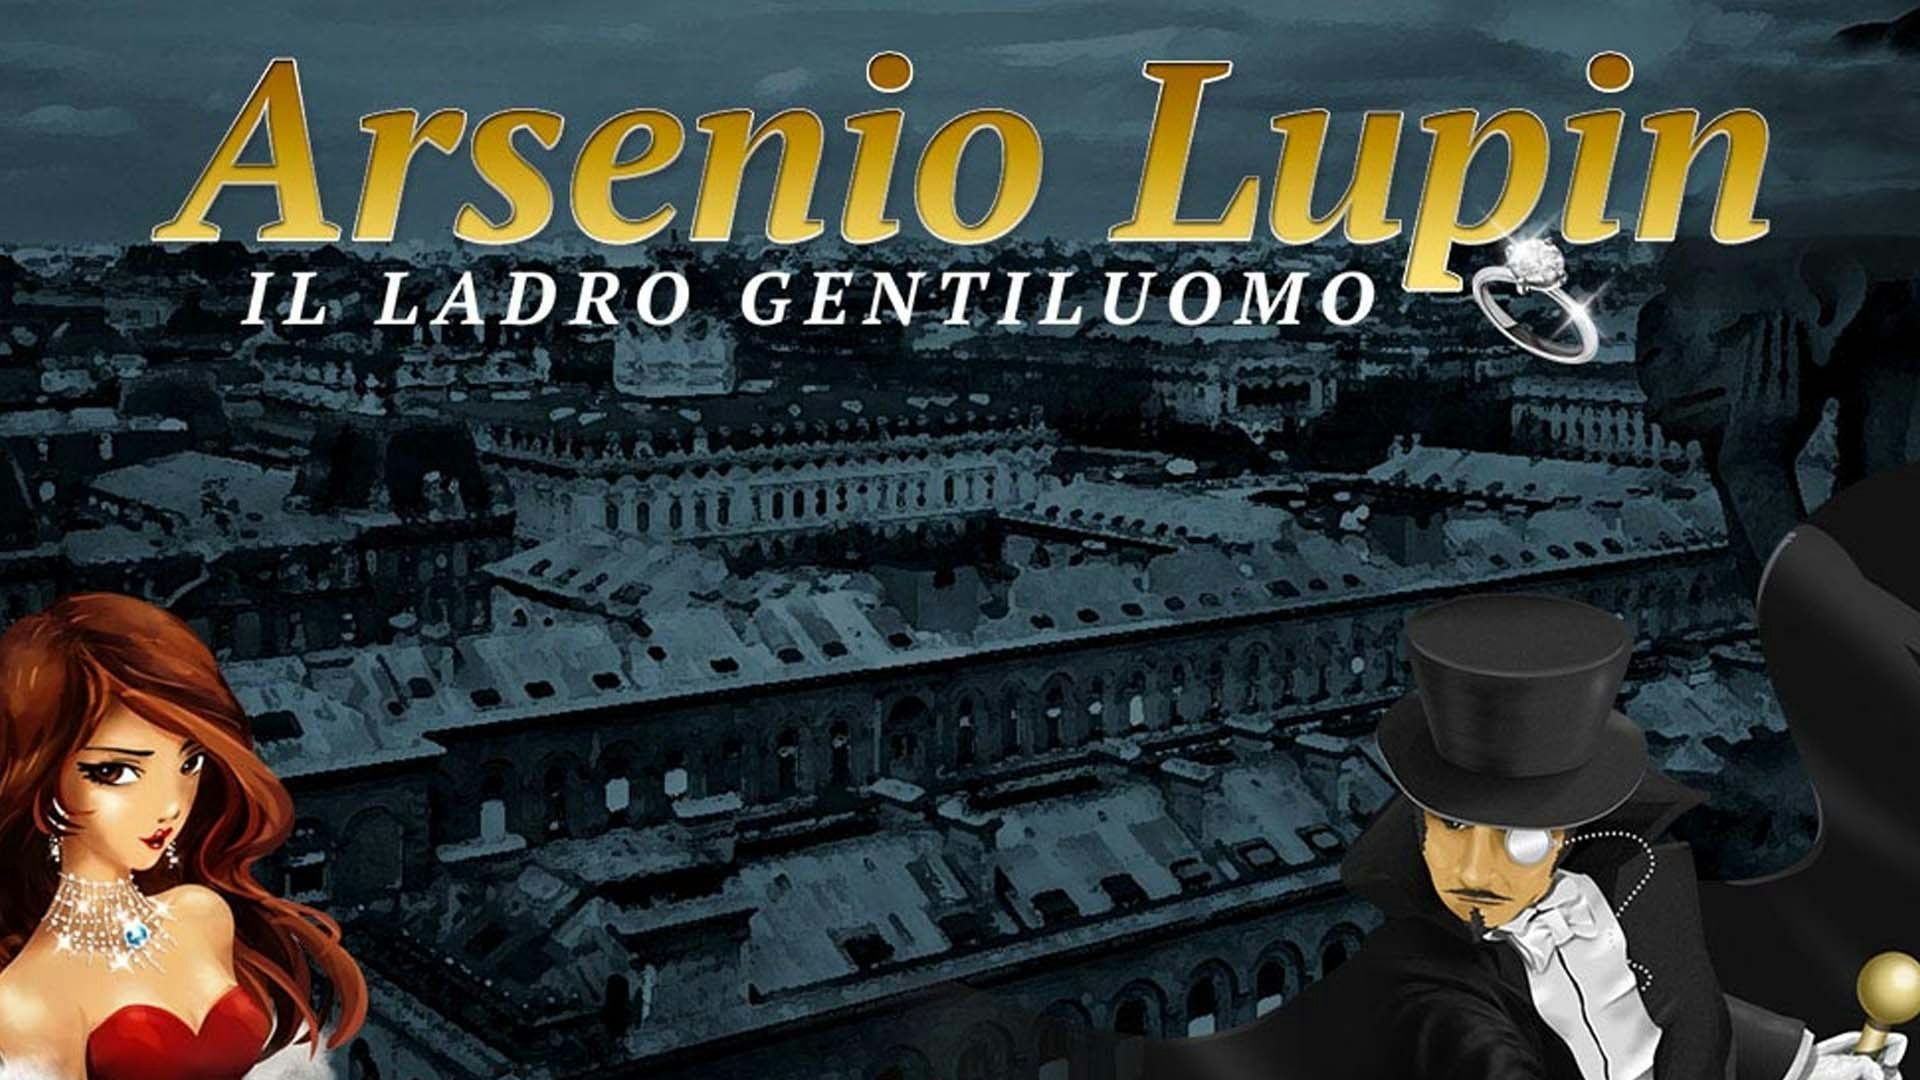 Arsenio Lupin: Il Ladro Gentiluomo